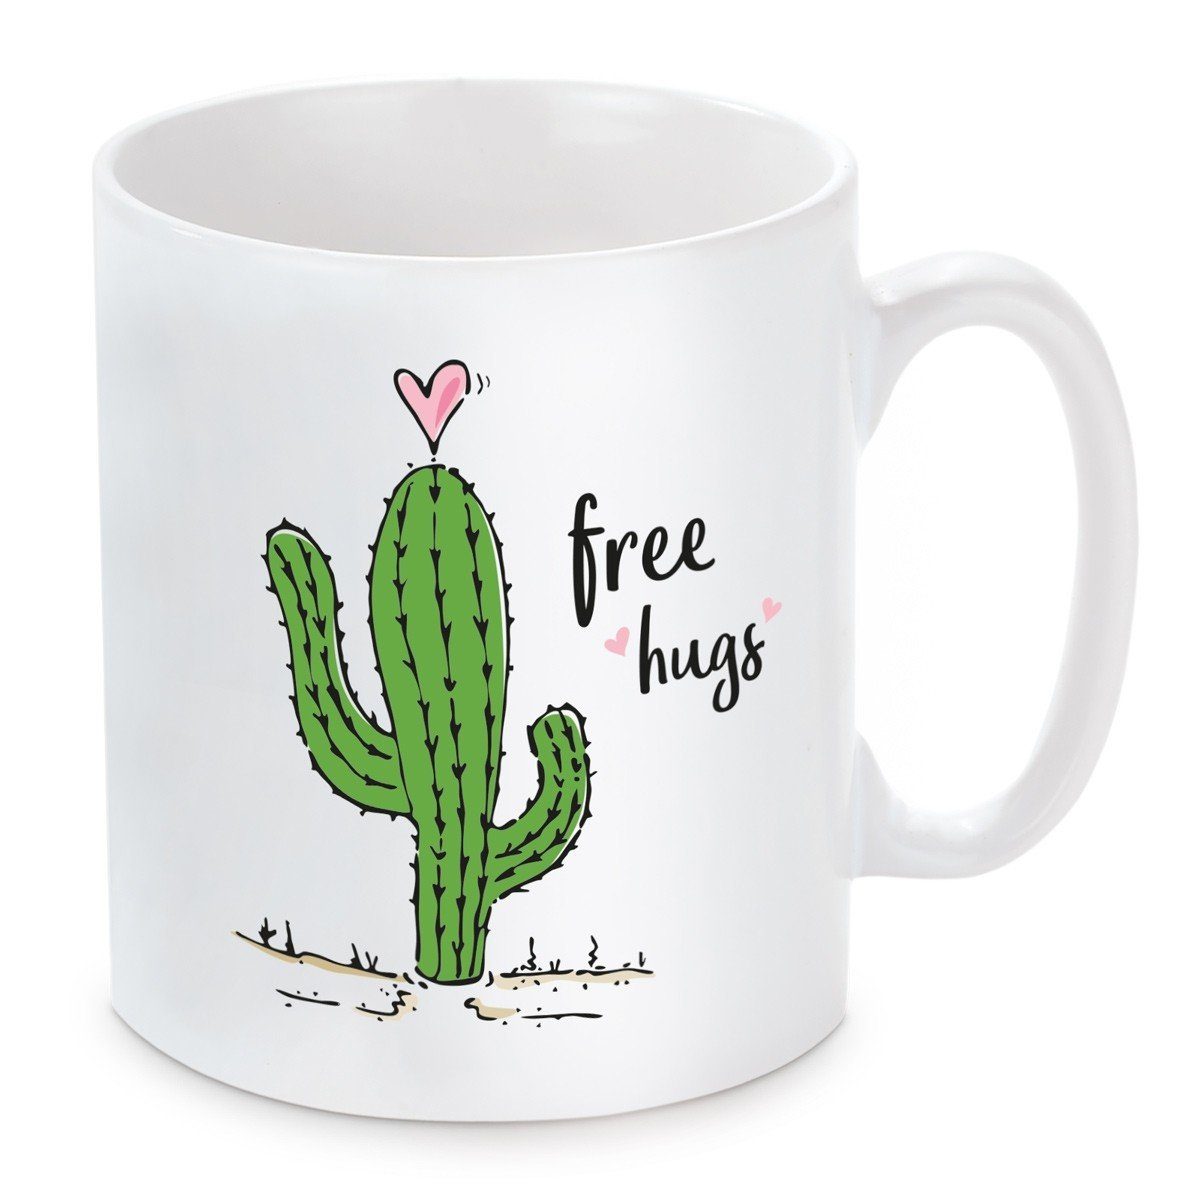 hugs, Free Kaffeetasse Tasse Motiv Herzbotschaft und mikrowellengeeignet Keramik, spülmaschinenfest mit Kaffeebecher